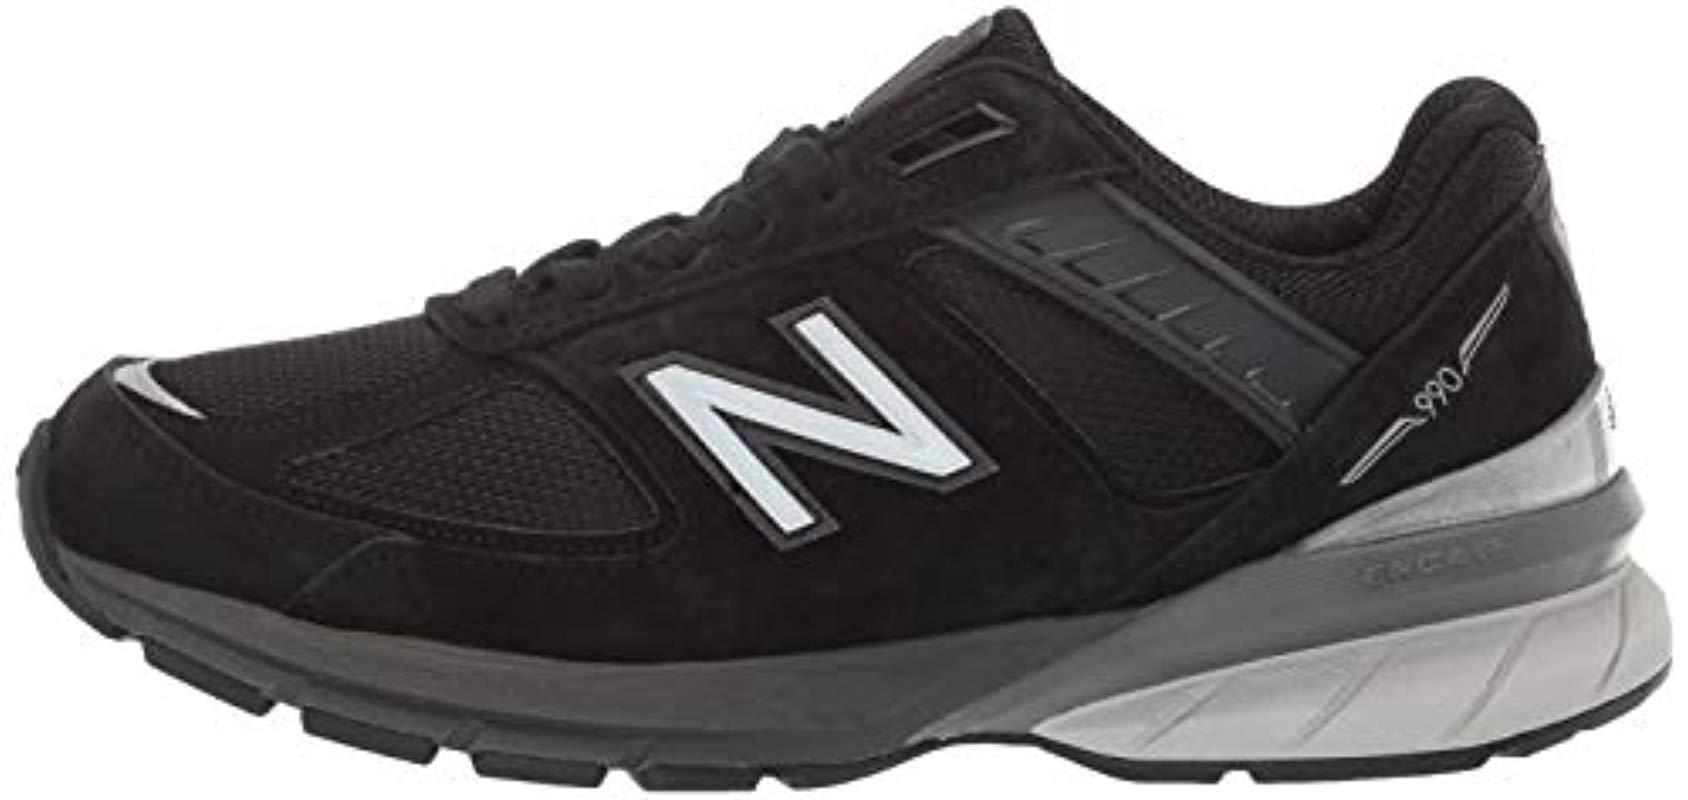 New Balance Suede 990v5 Sneaker in Black/Silver (Black) - Lyst